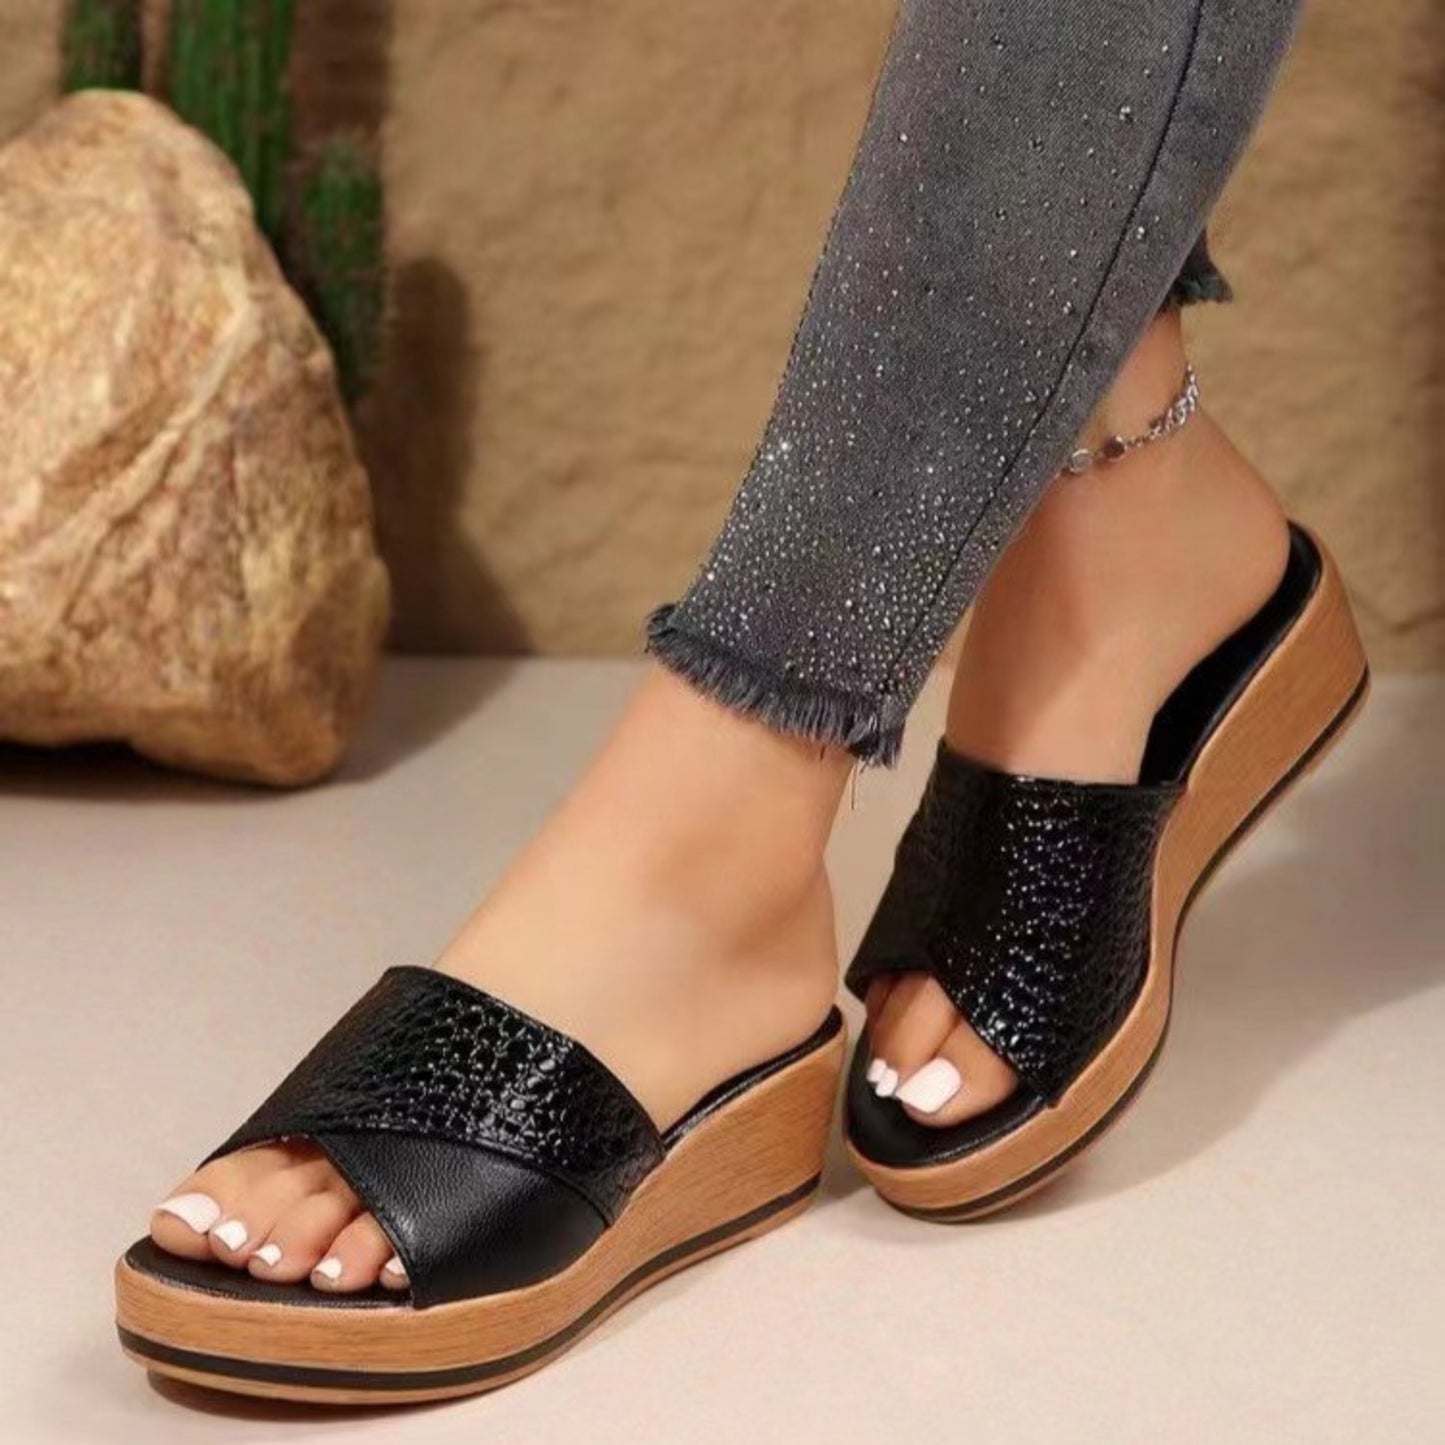 TEEK - PU Leather Open Toe Sandals SHOES TEEK Trend Black US 5 